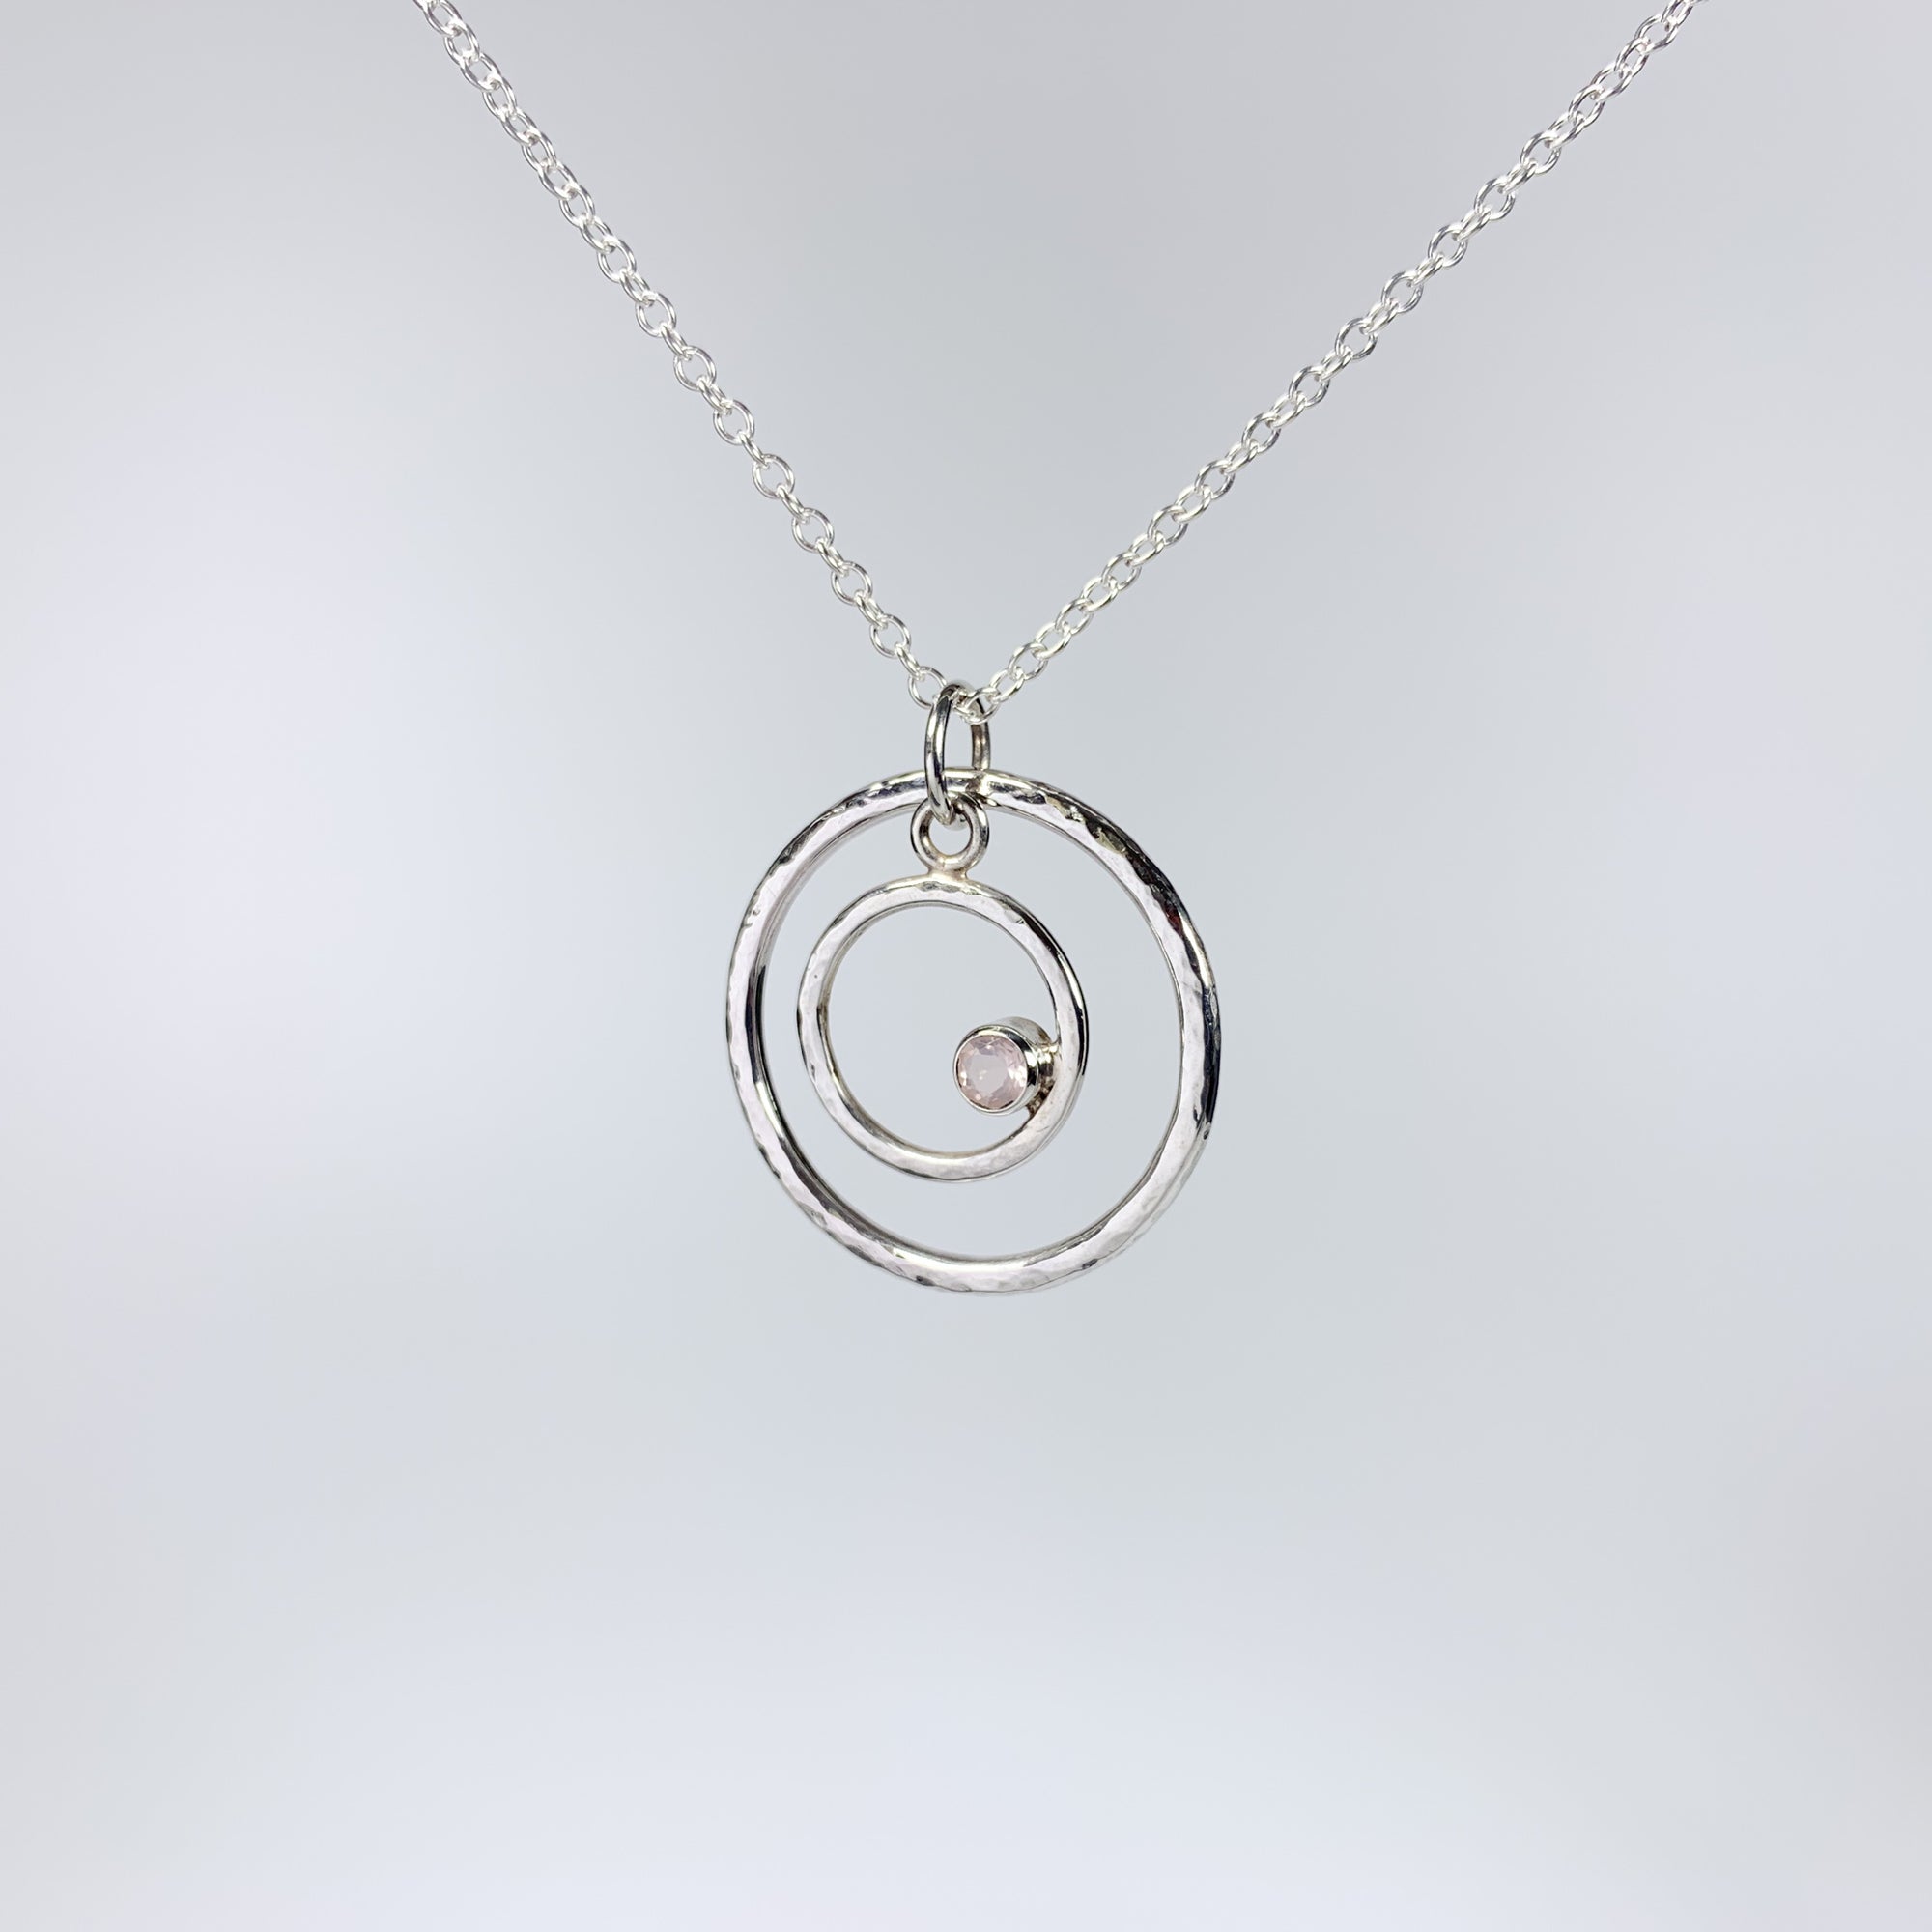 Caldera Eclissi Doppia Rose Quartz Silver Pendant Necklace